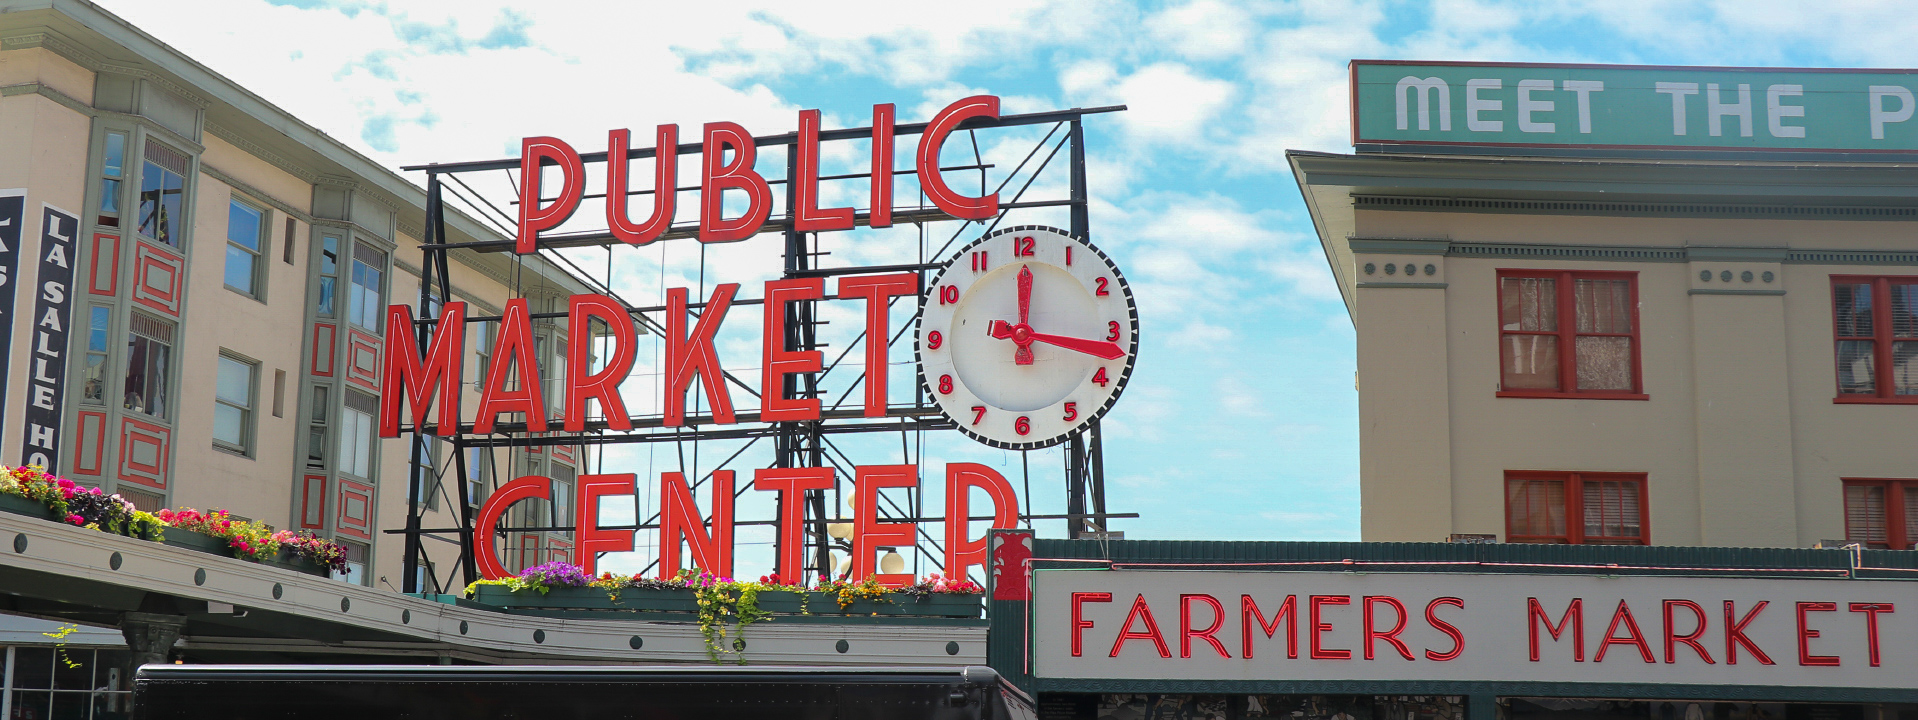 Pike Place Market - Seattle